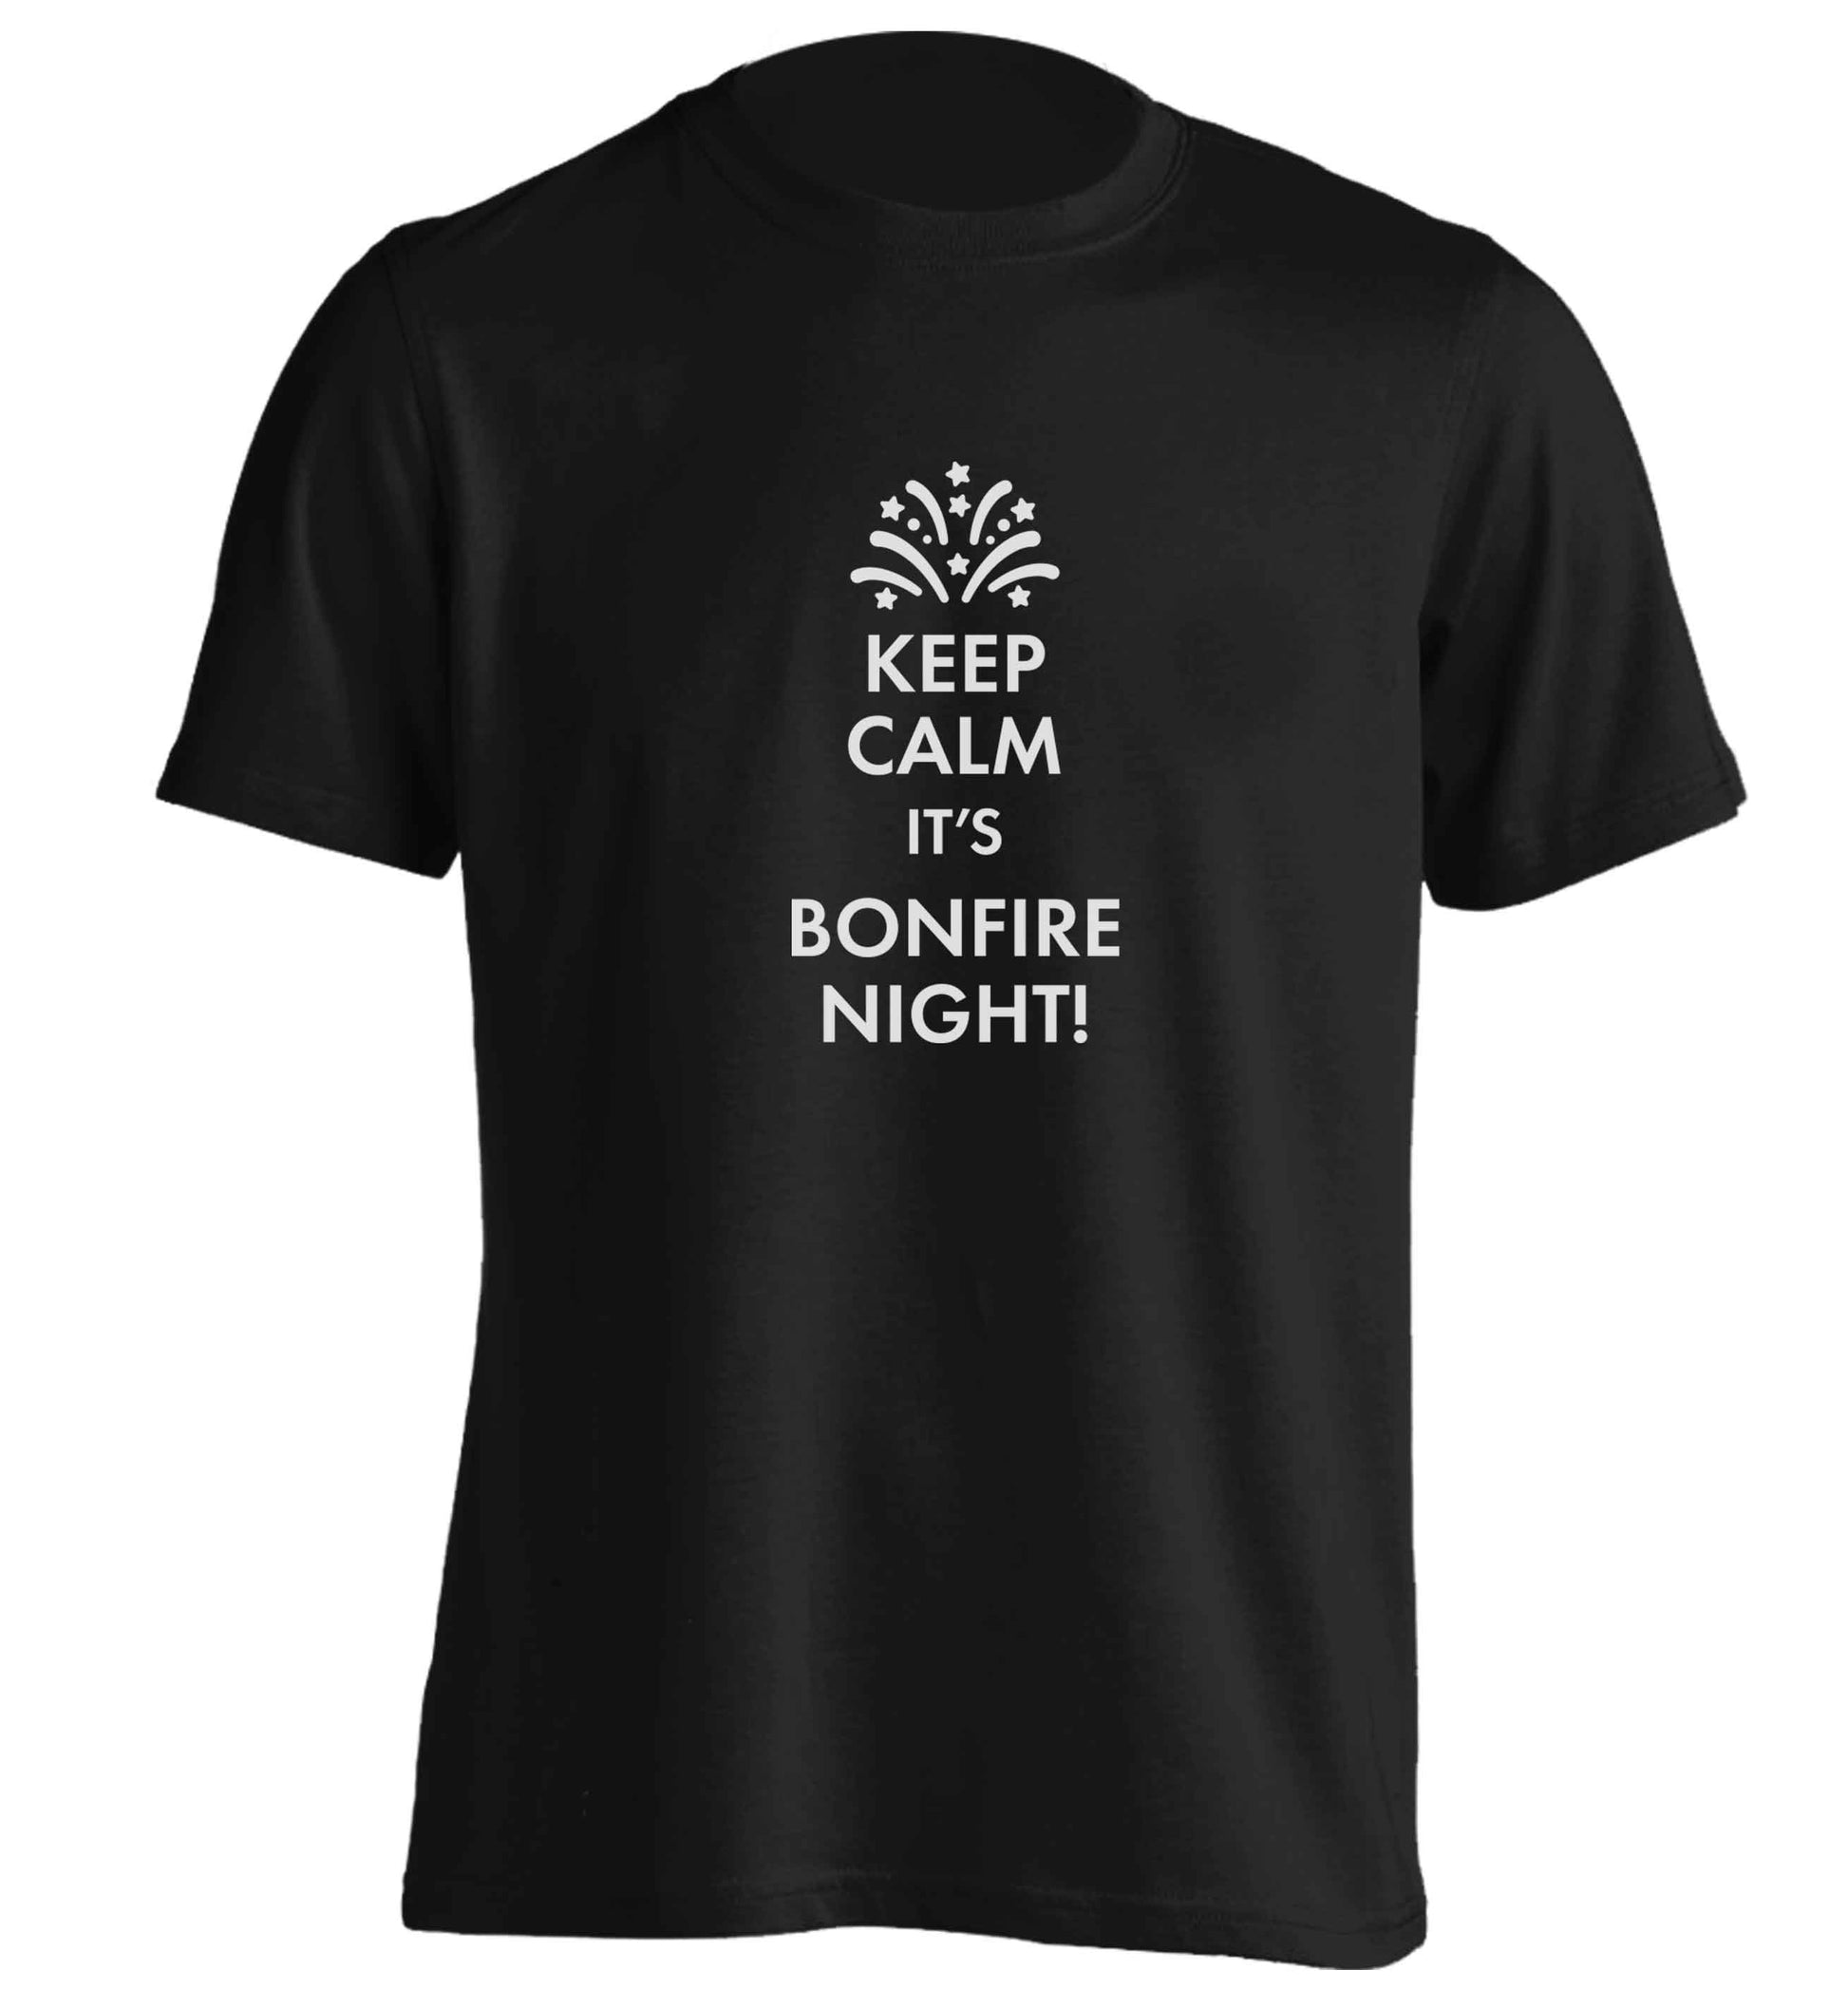 Keep calm its bonfire night adults unisex black Tshirt 2XL